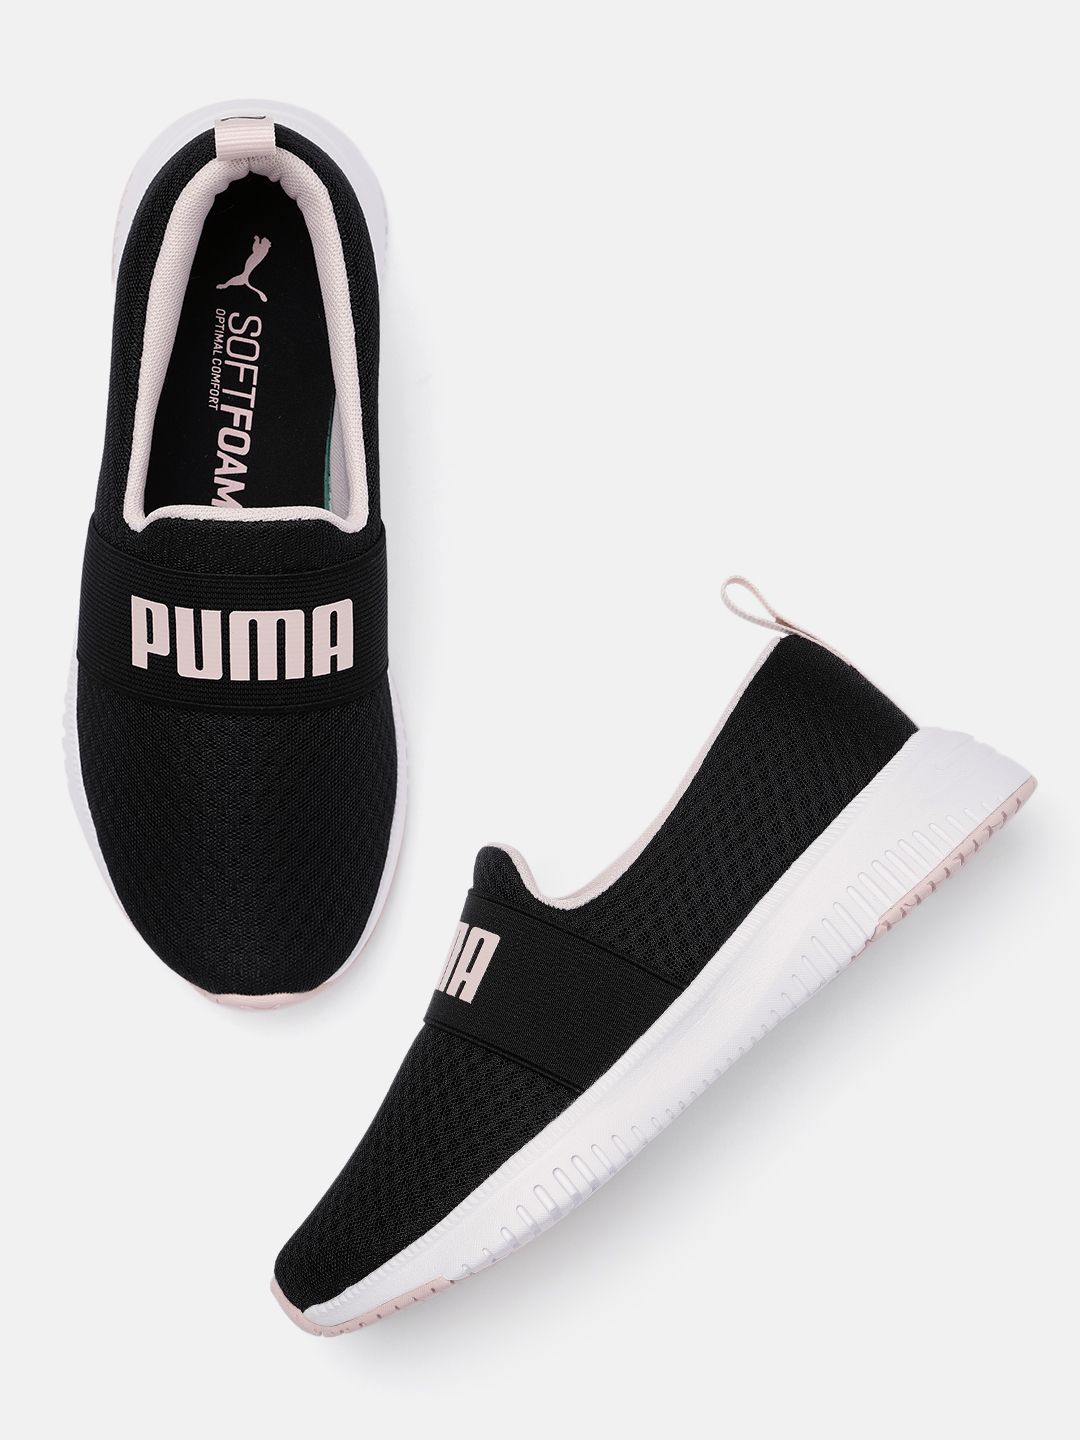 Puma Unisex Black Flyer Flex Strap Running Shoes Price in India